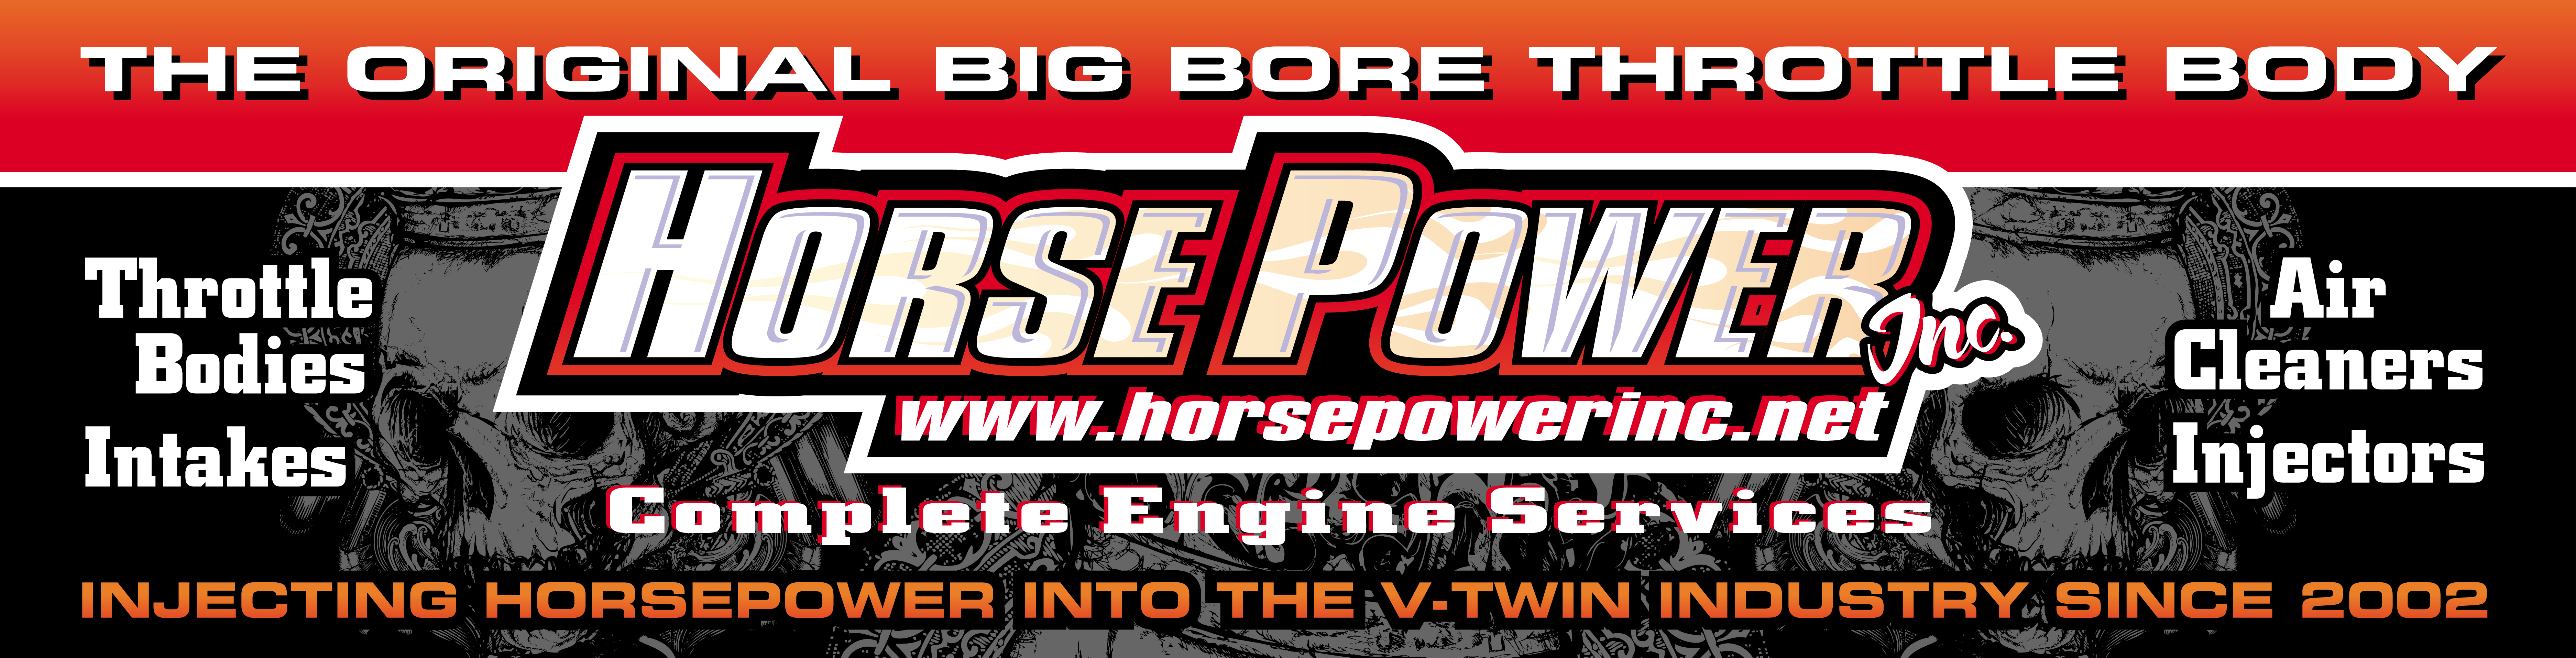 HorsepowerWeb2.jpg